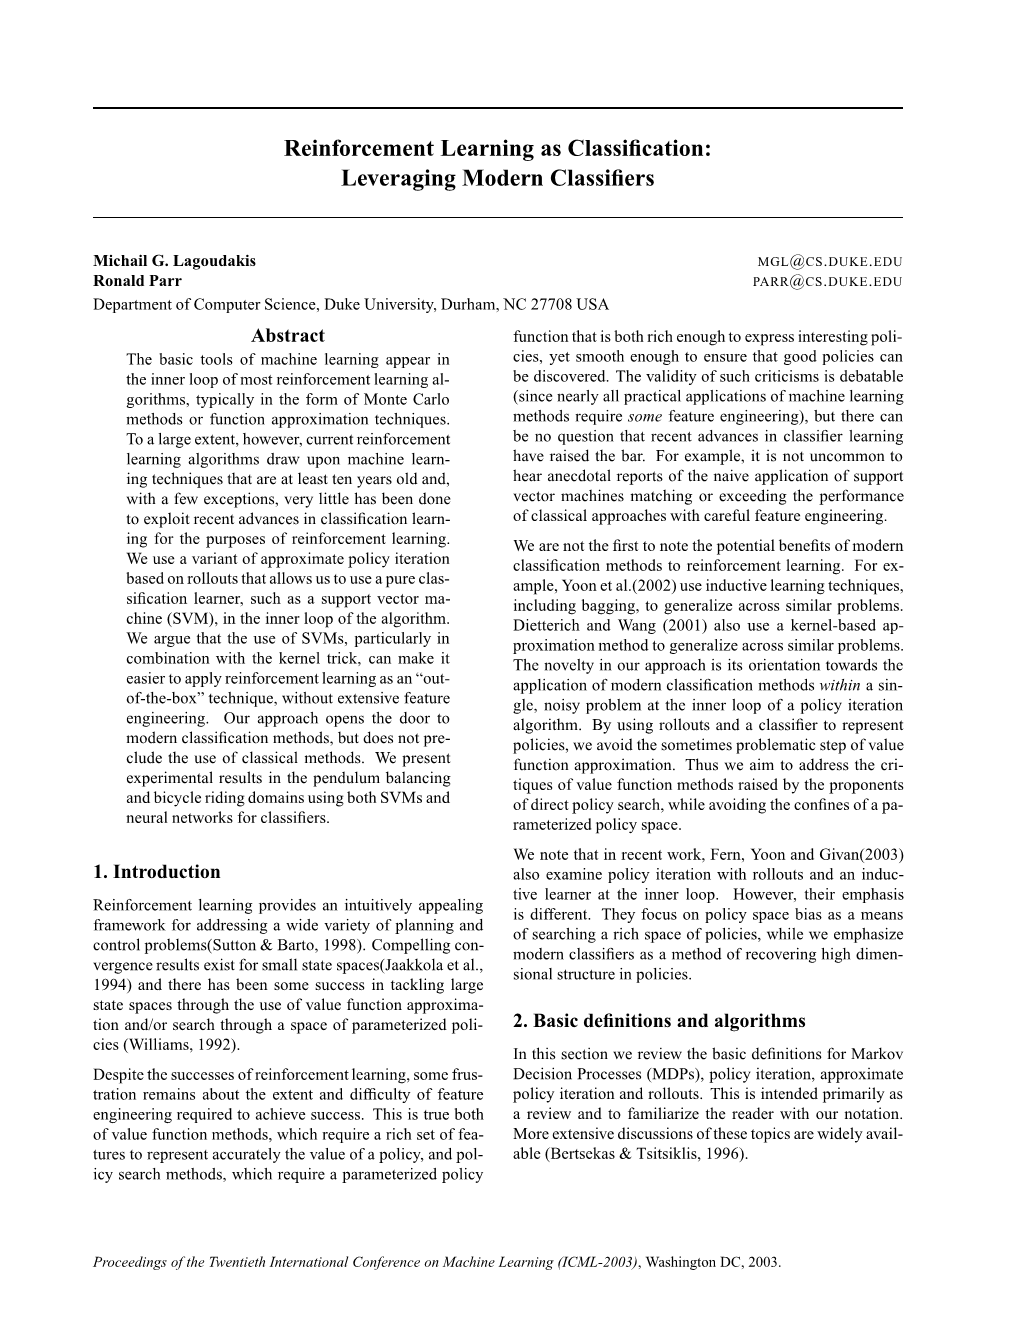 Reinforcement Learning As Classification: Leveraging Modern Classifiers